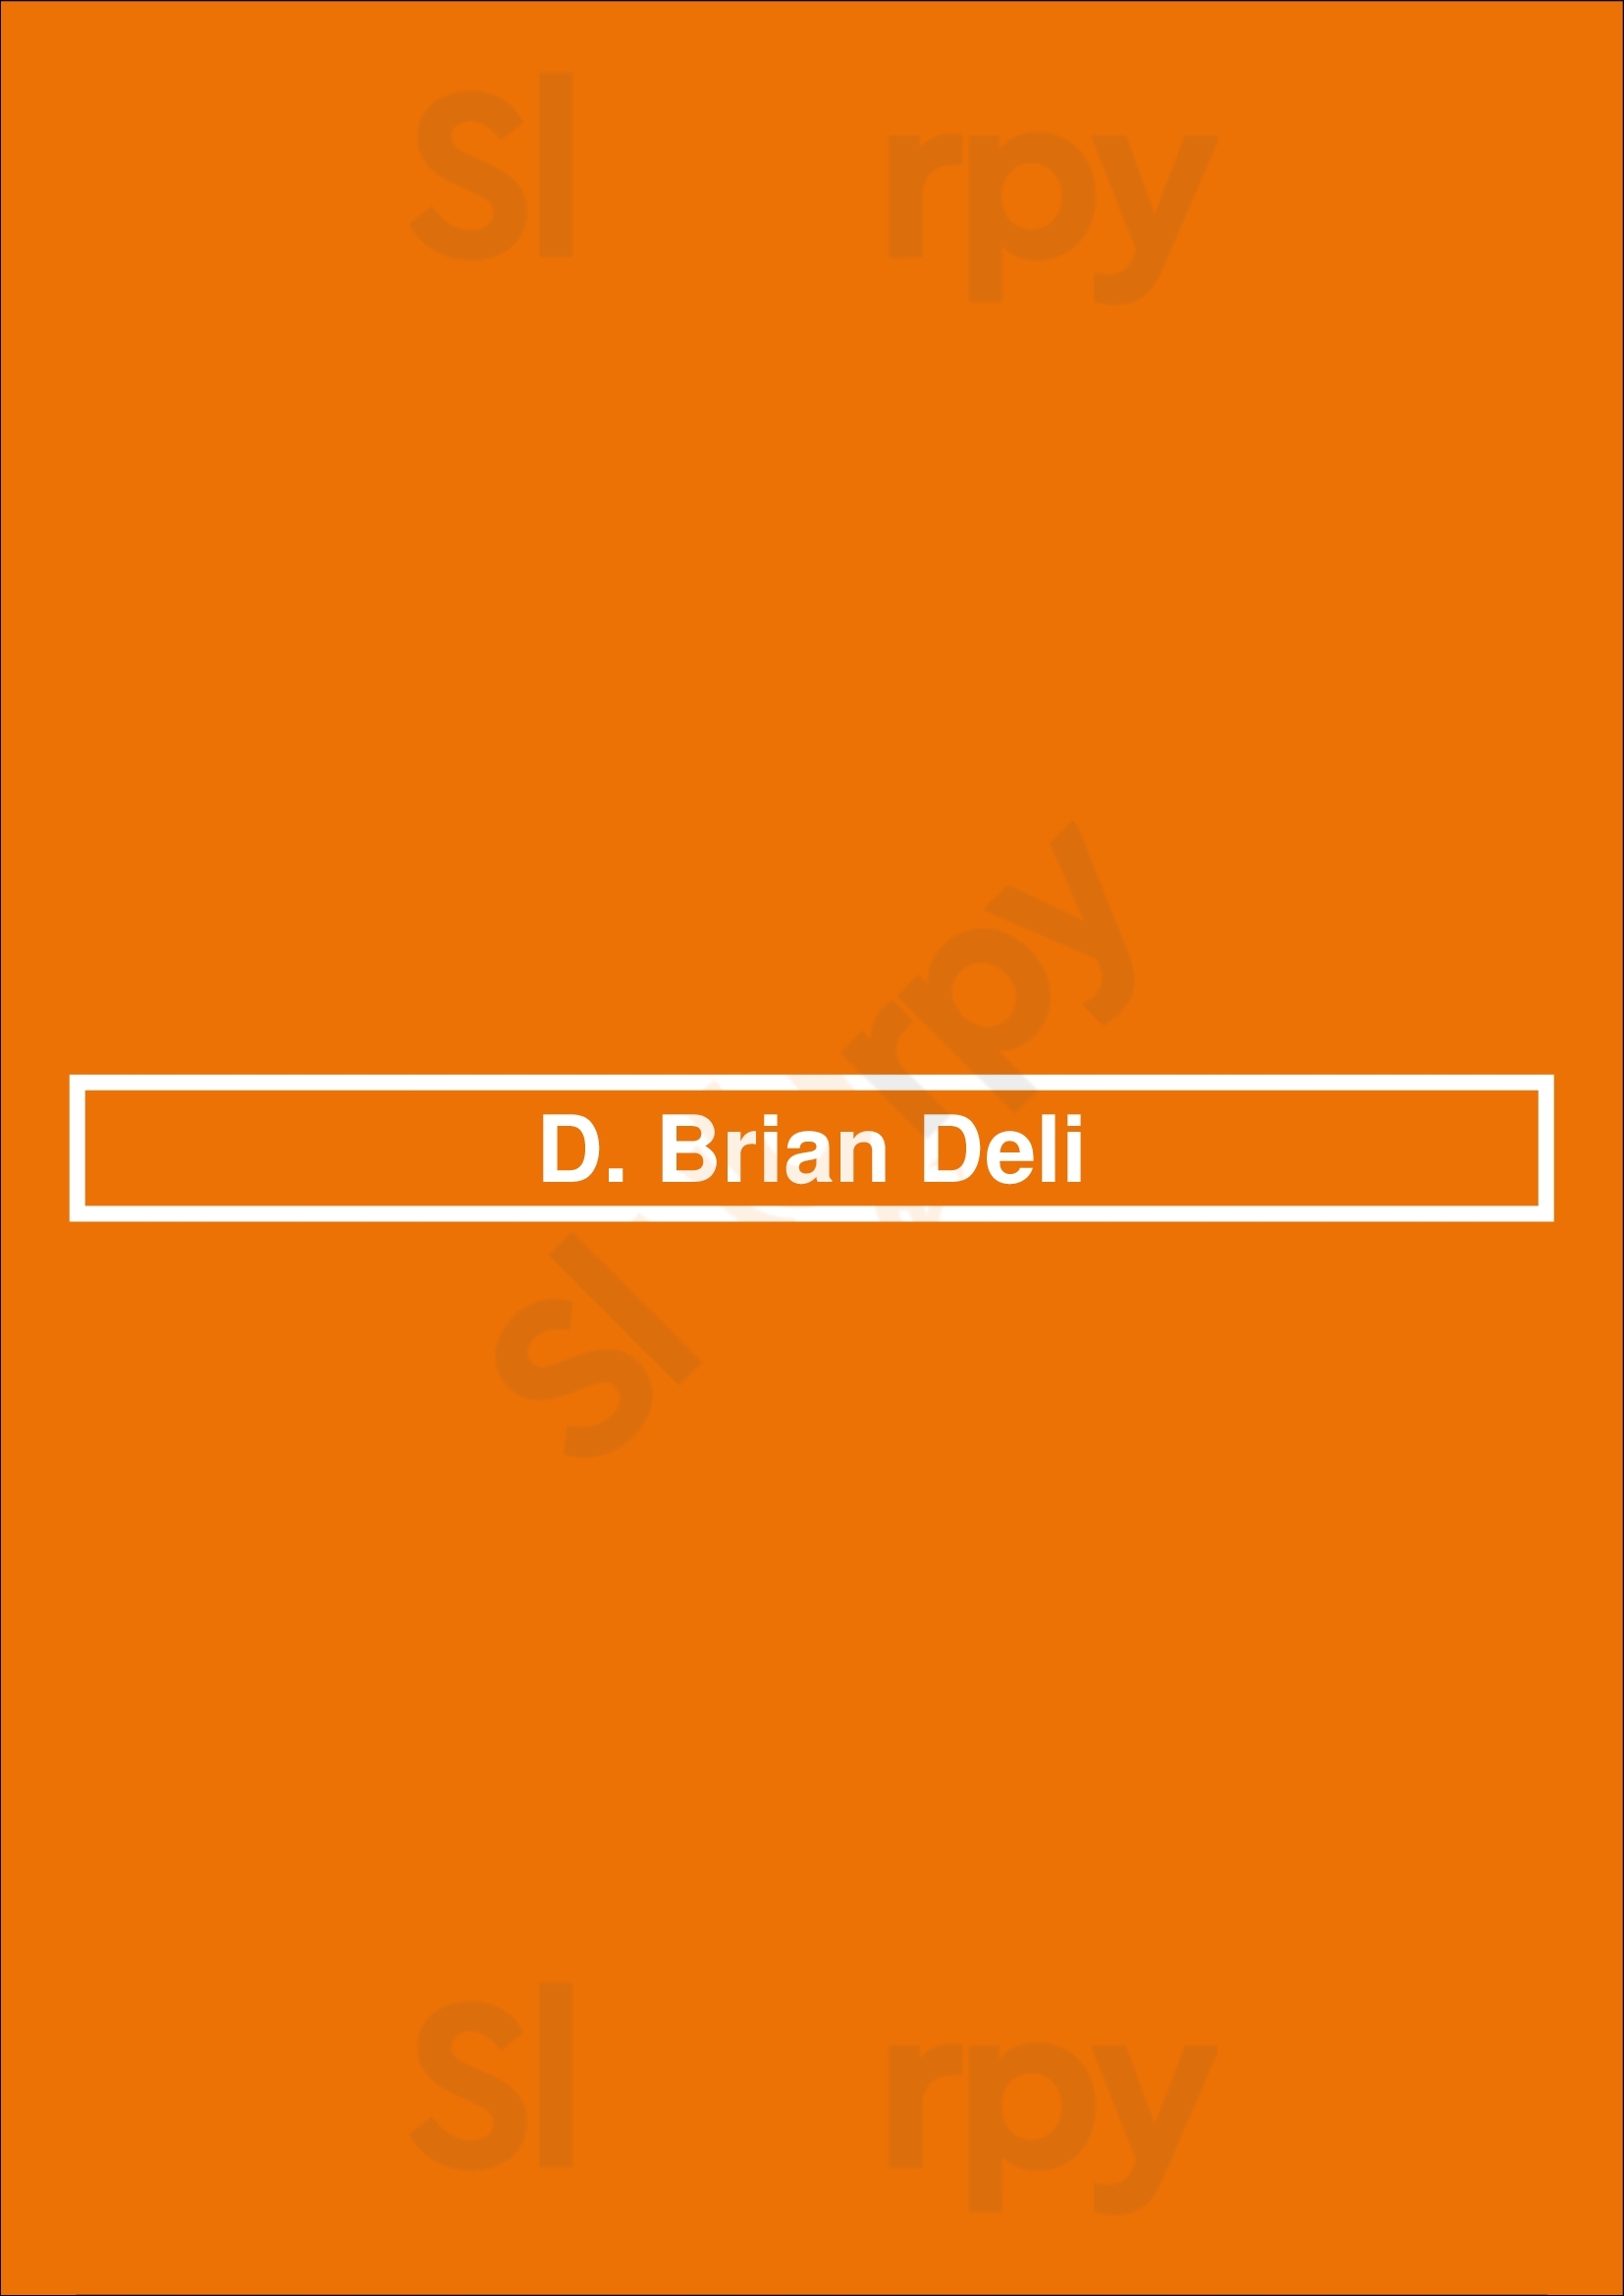 D. Brian Deli Minneapolis Menu - 1